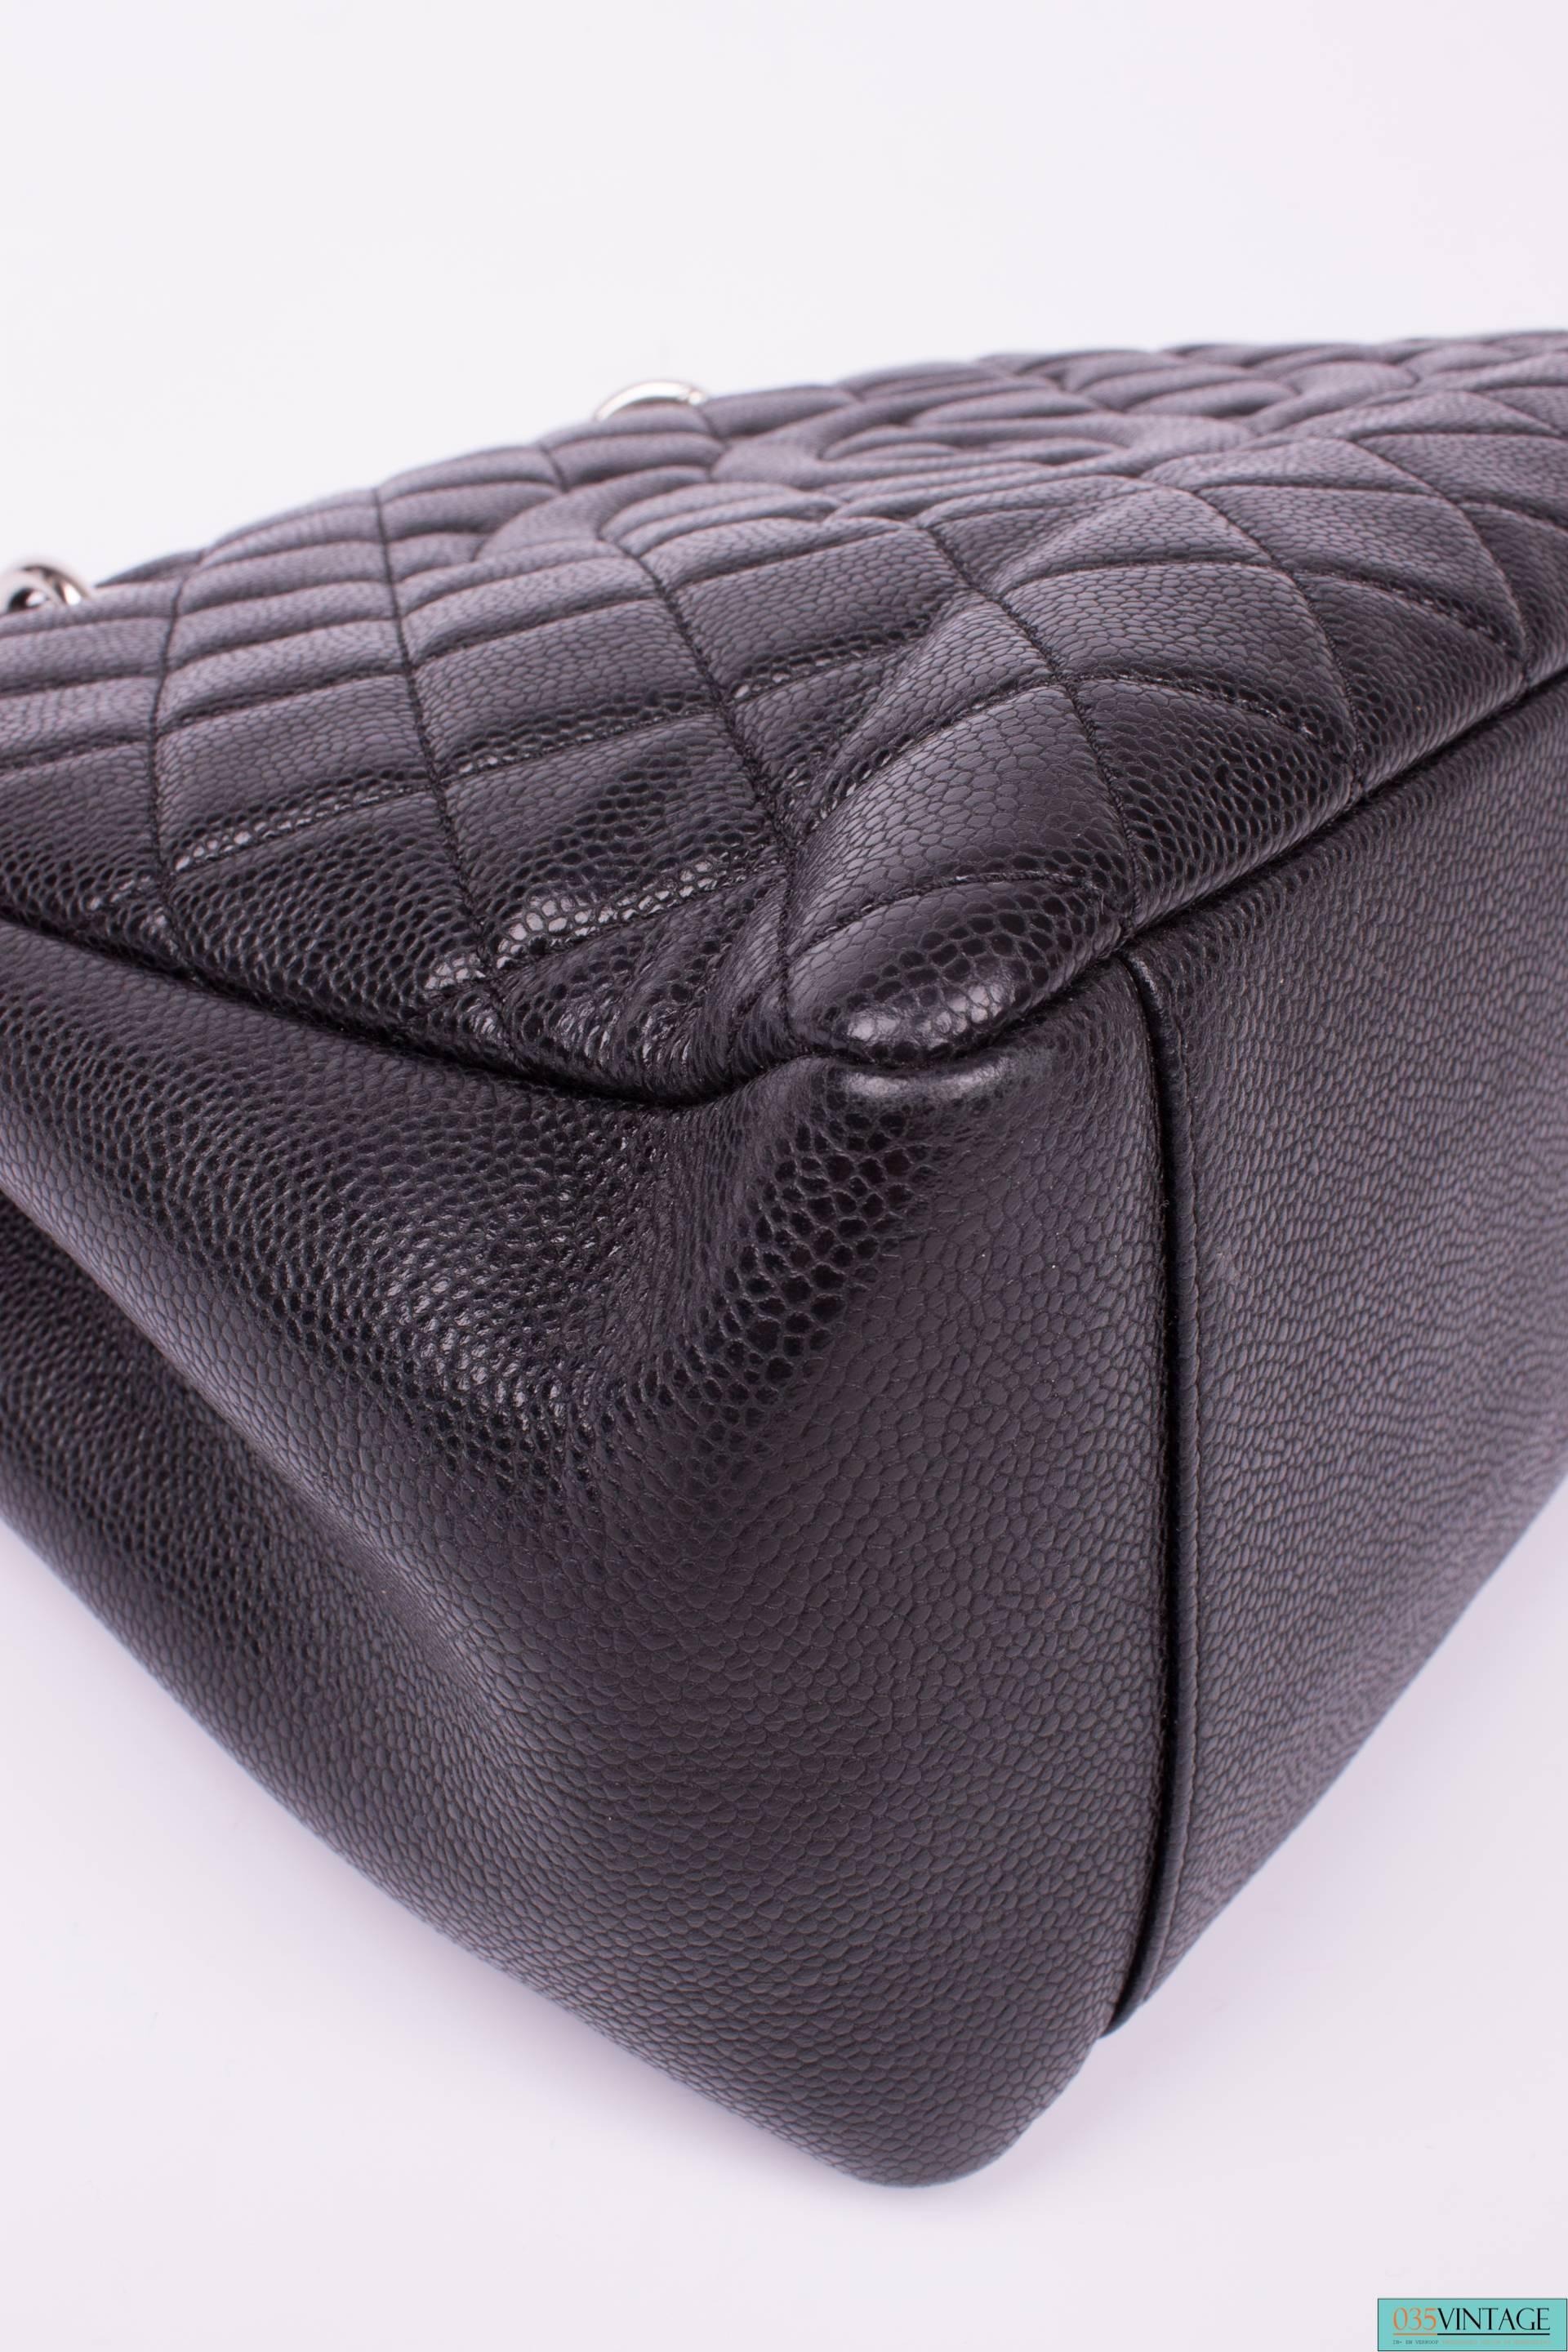 Chanel Grand Shopper Bag - black caviar leather 3